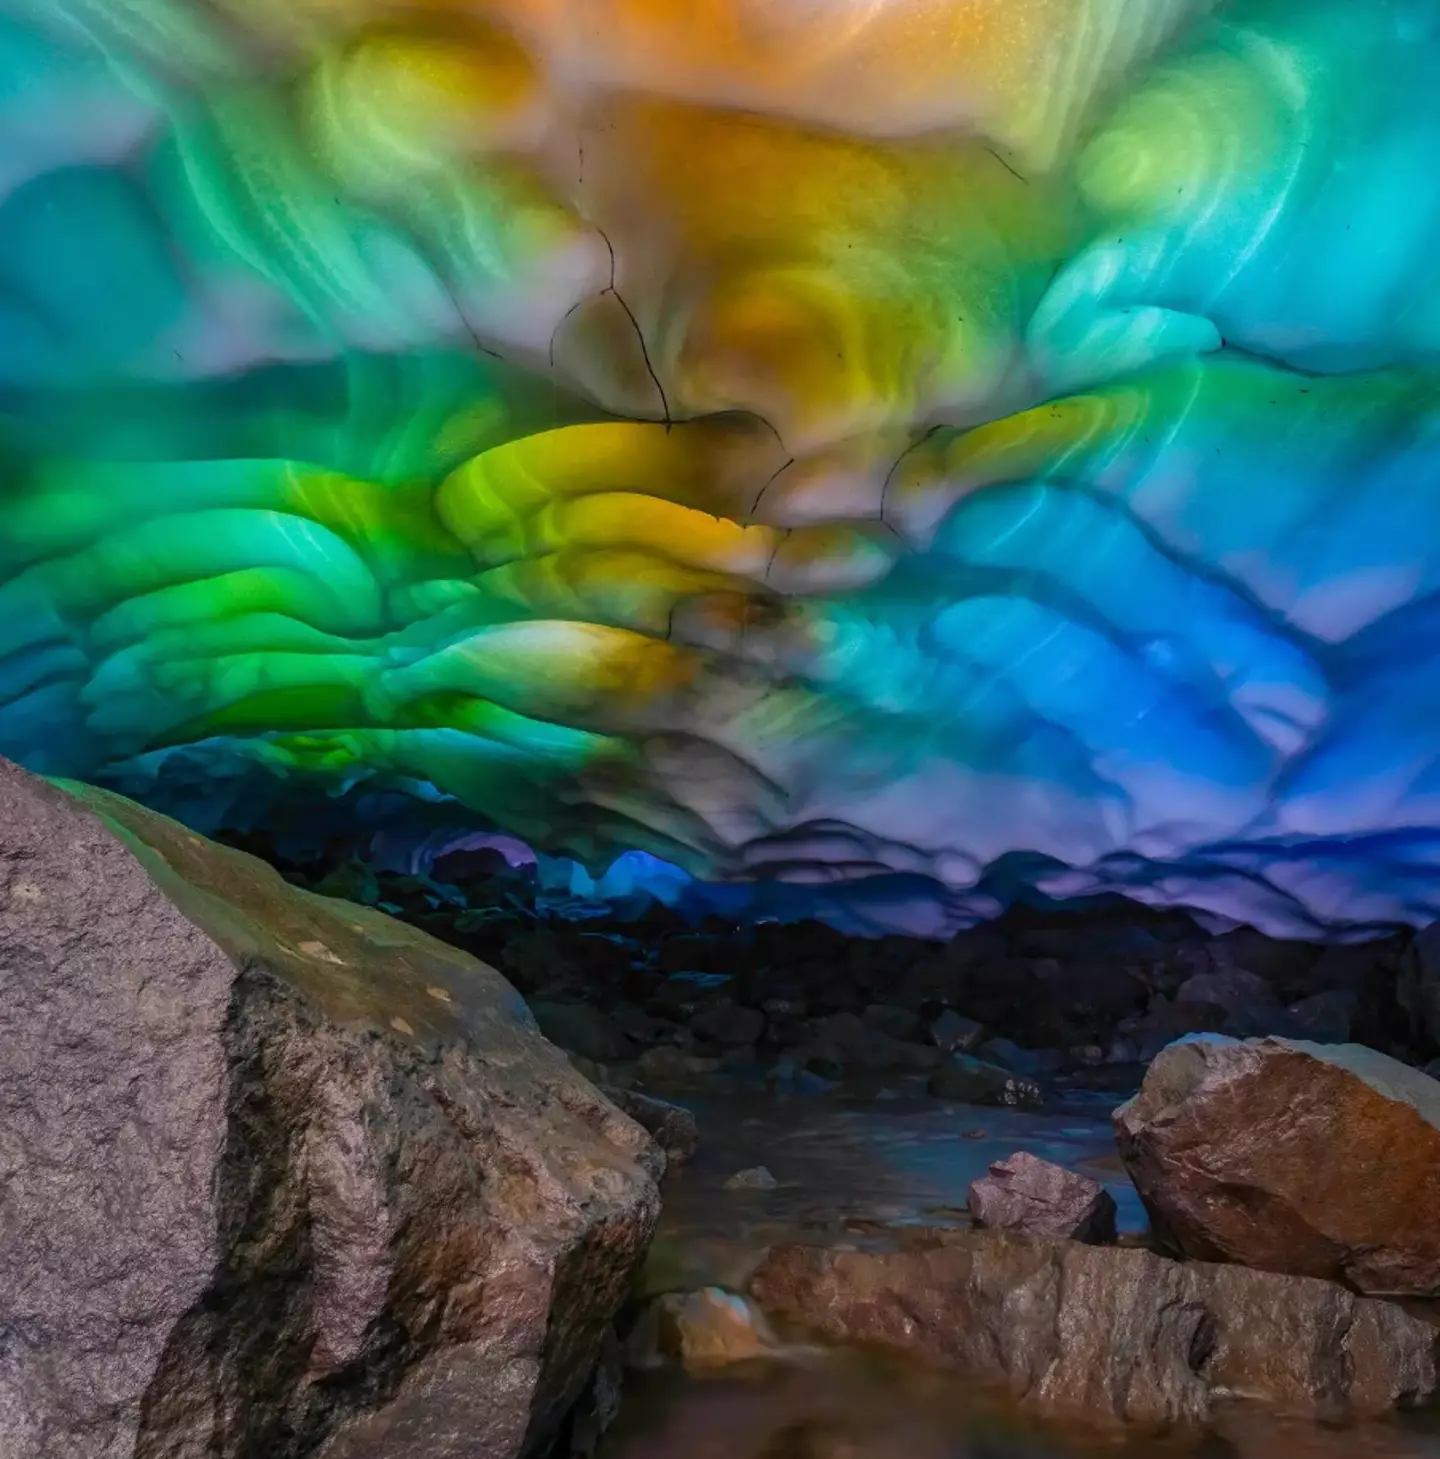 Mathew Nichols captured beautiful photos inside an ice cave.